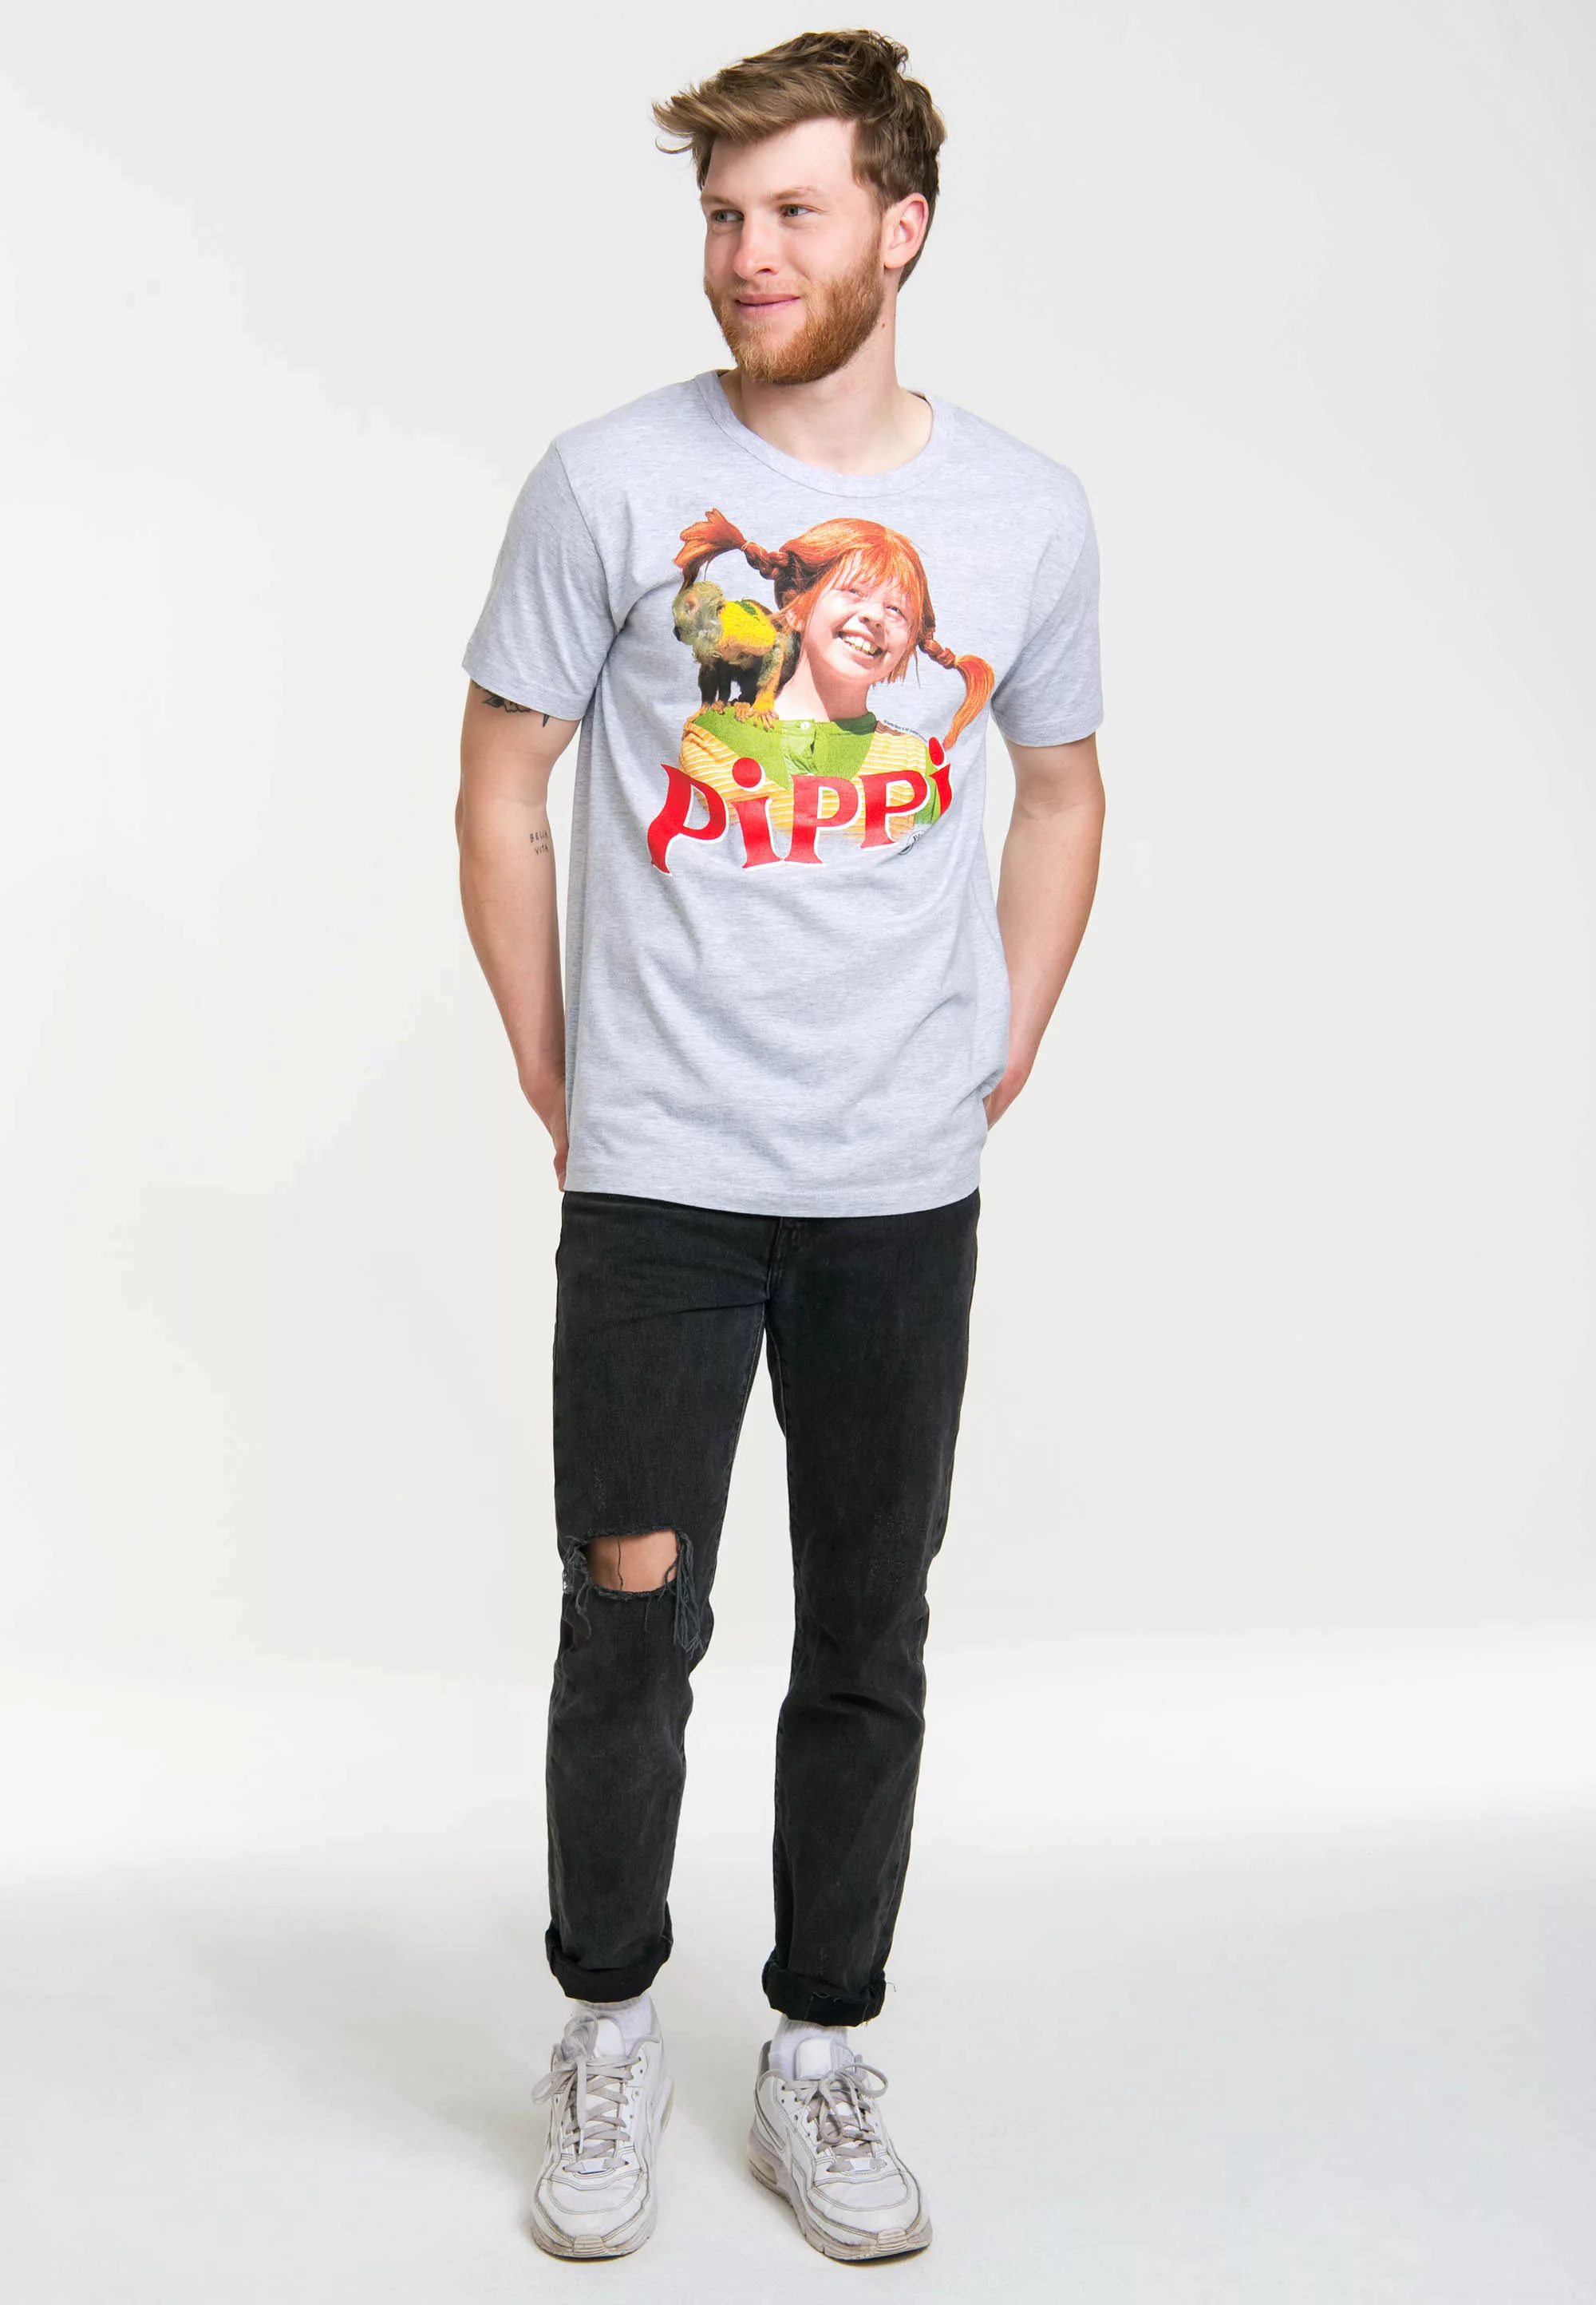 LOGOSHIRT T-Shirt "Pippi Langstrumpf - Äffchen Herr Nilsson" günstig online kaufen